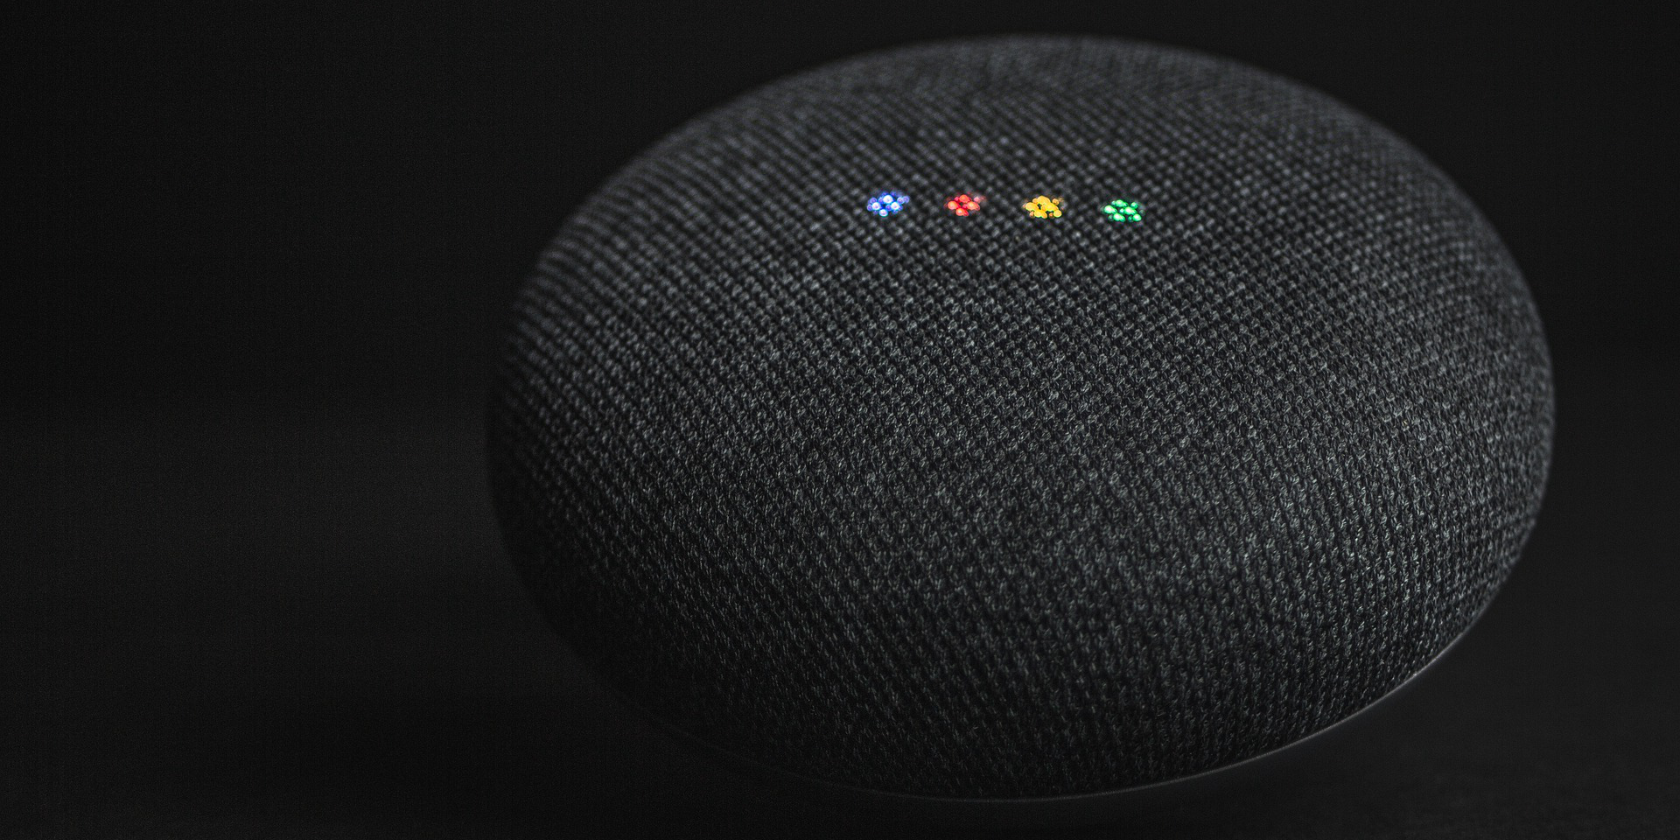 A Google smart speaker